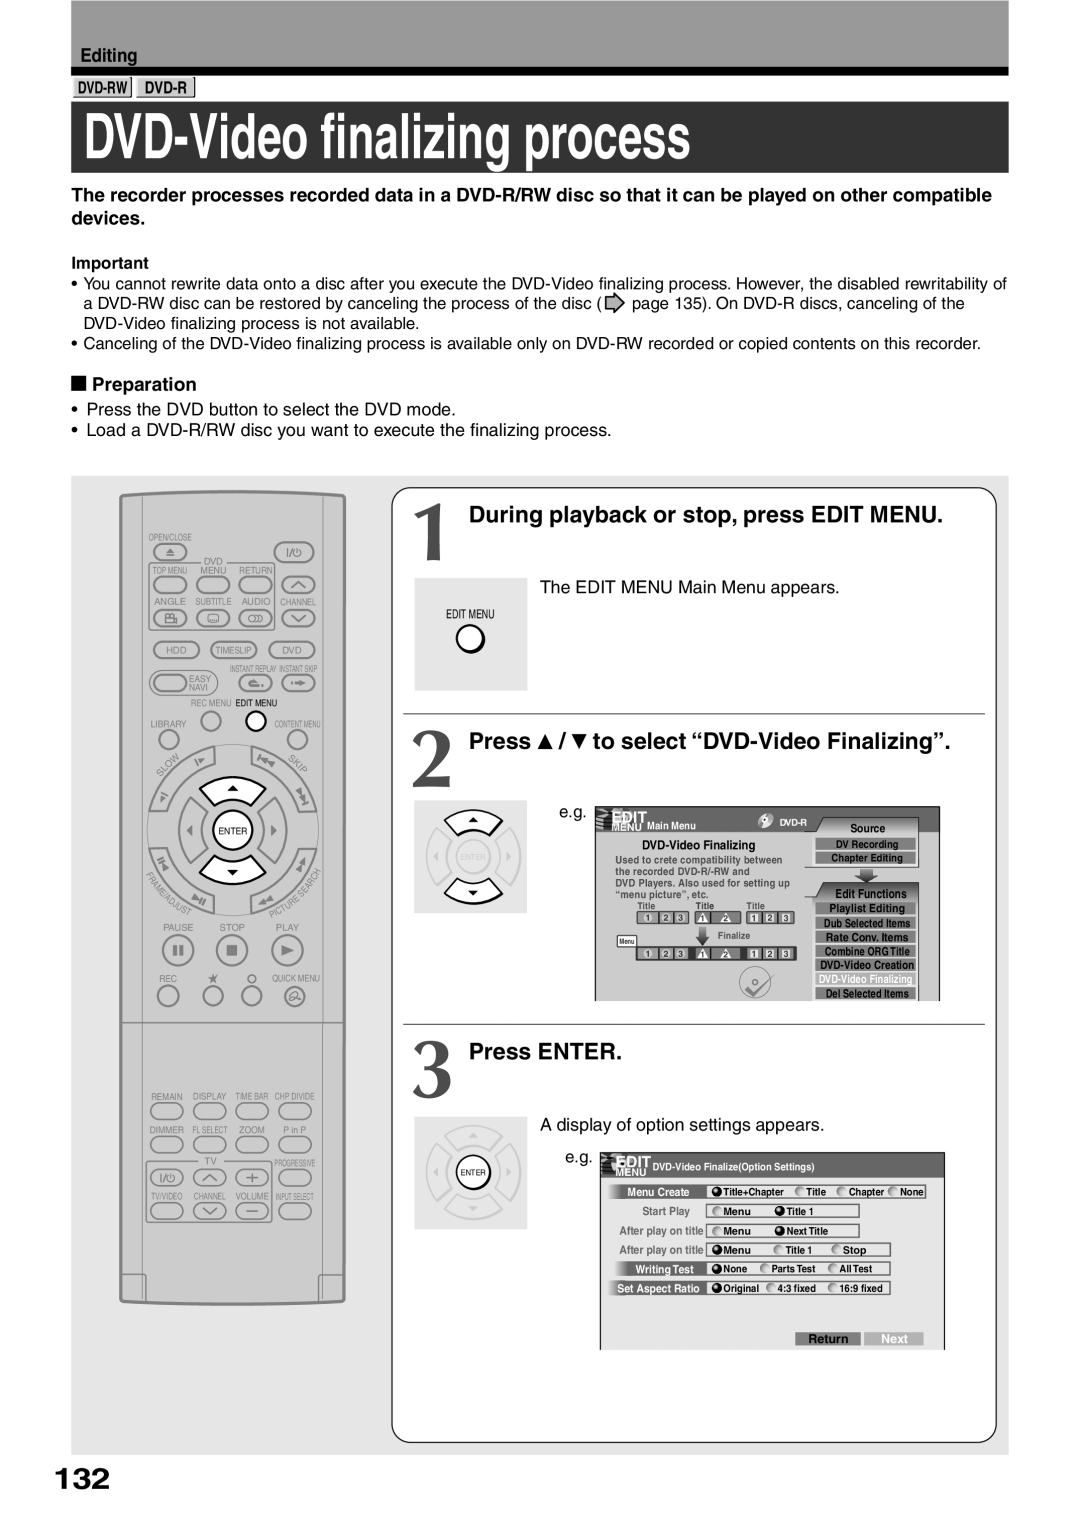 Toshiba RD-XS32SC DVD-Videofinalizing process, Press / to select “DVD-VideoFinalizing”, Press ENTER, Editing, Preparation 